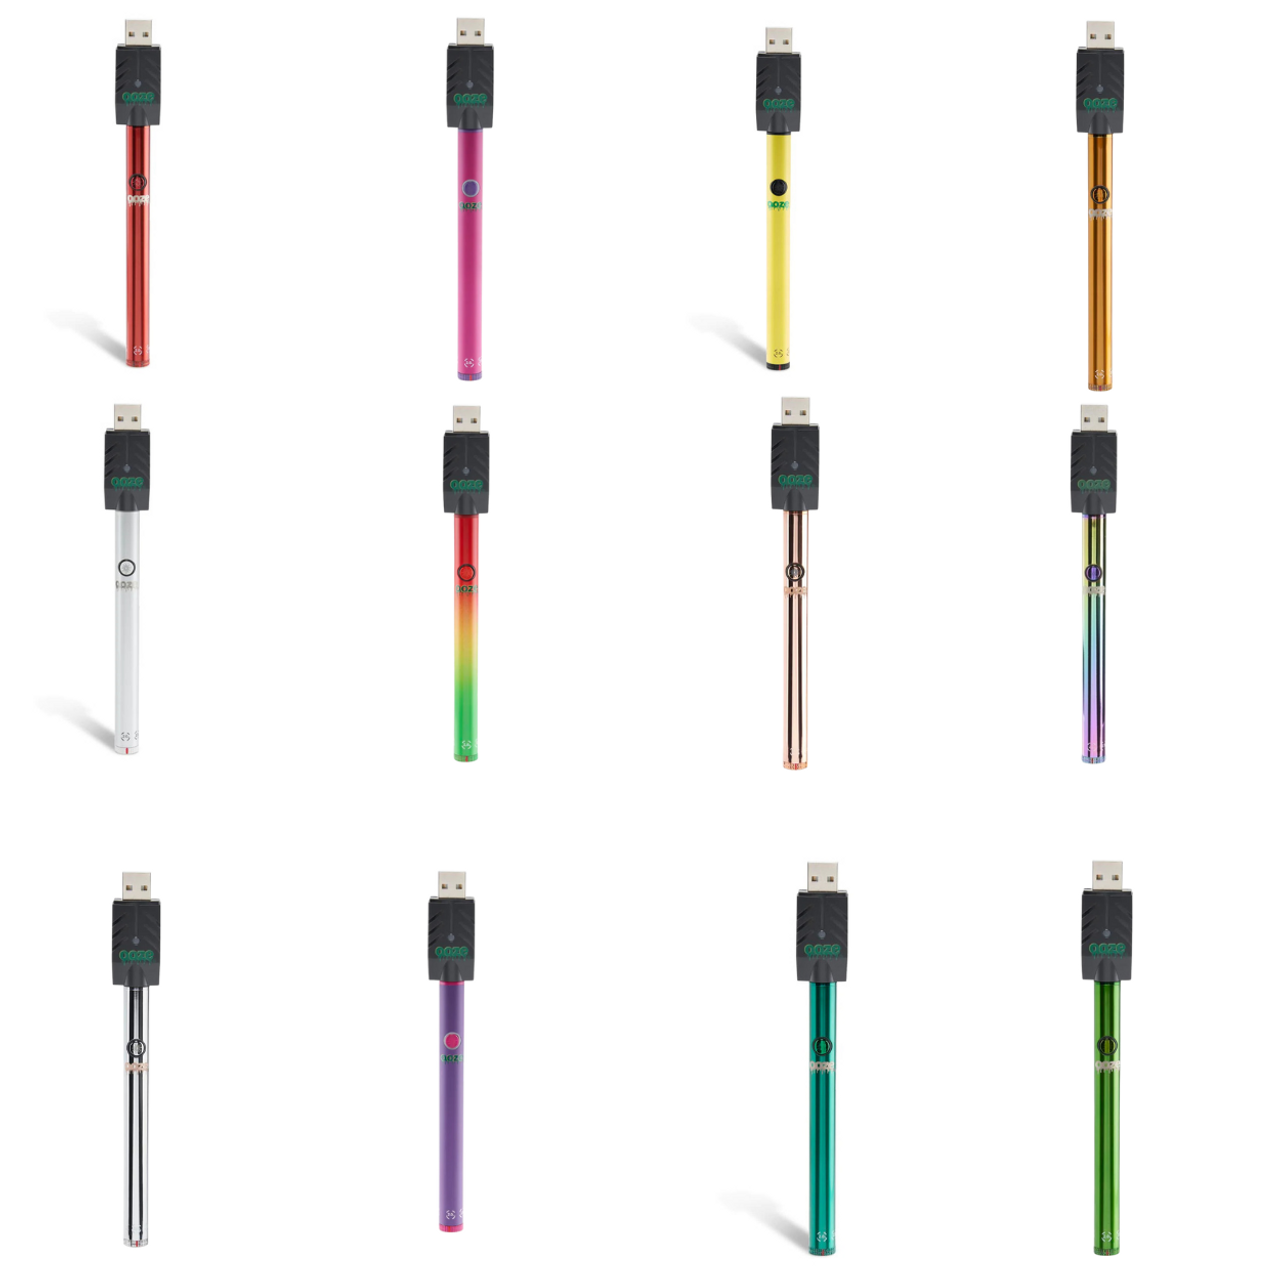  Ooze Slim Twist Vape Pen 2.0 Battery 510 Thread Vaporizer + USB Charger | Assorted Colors